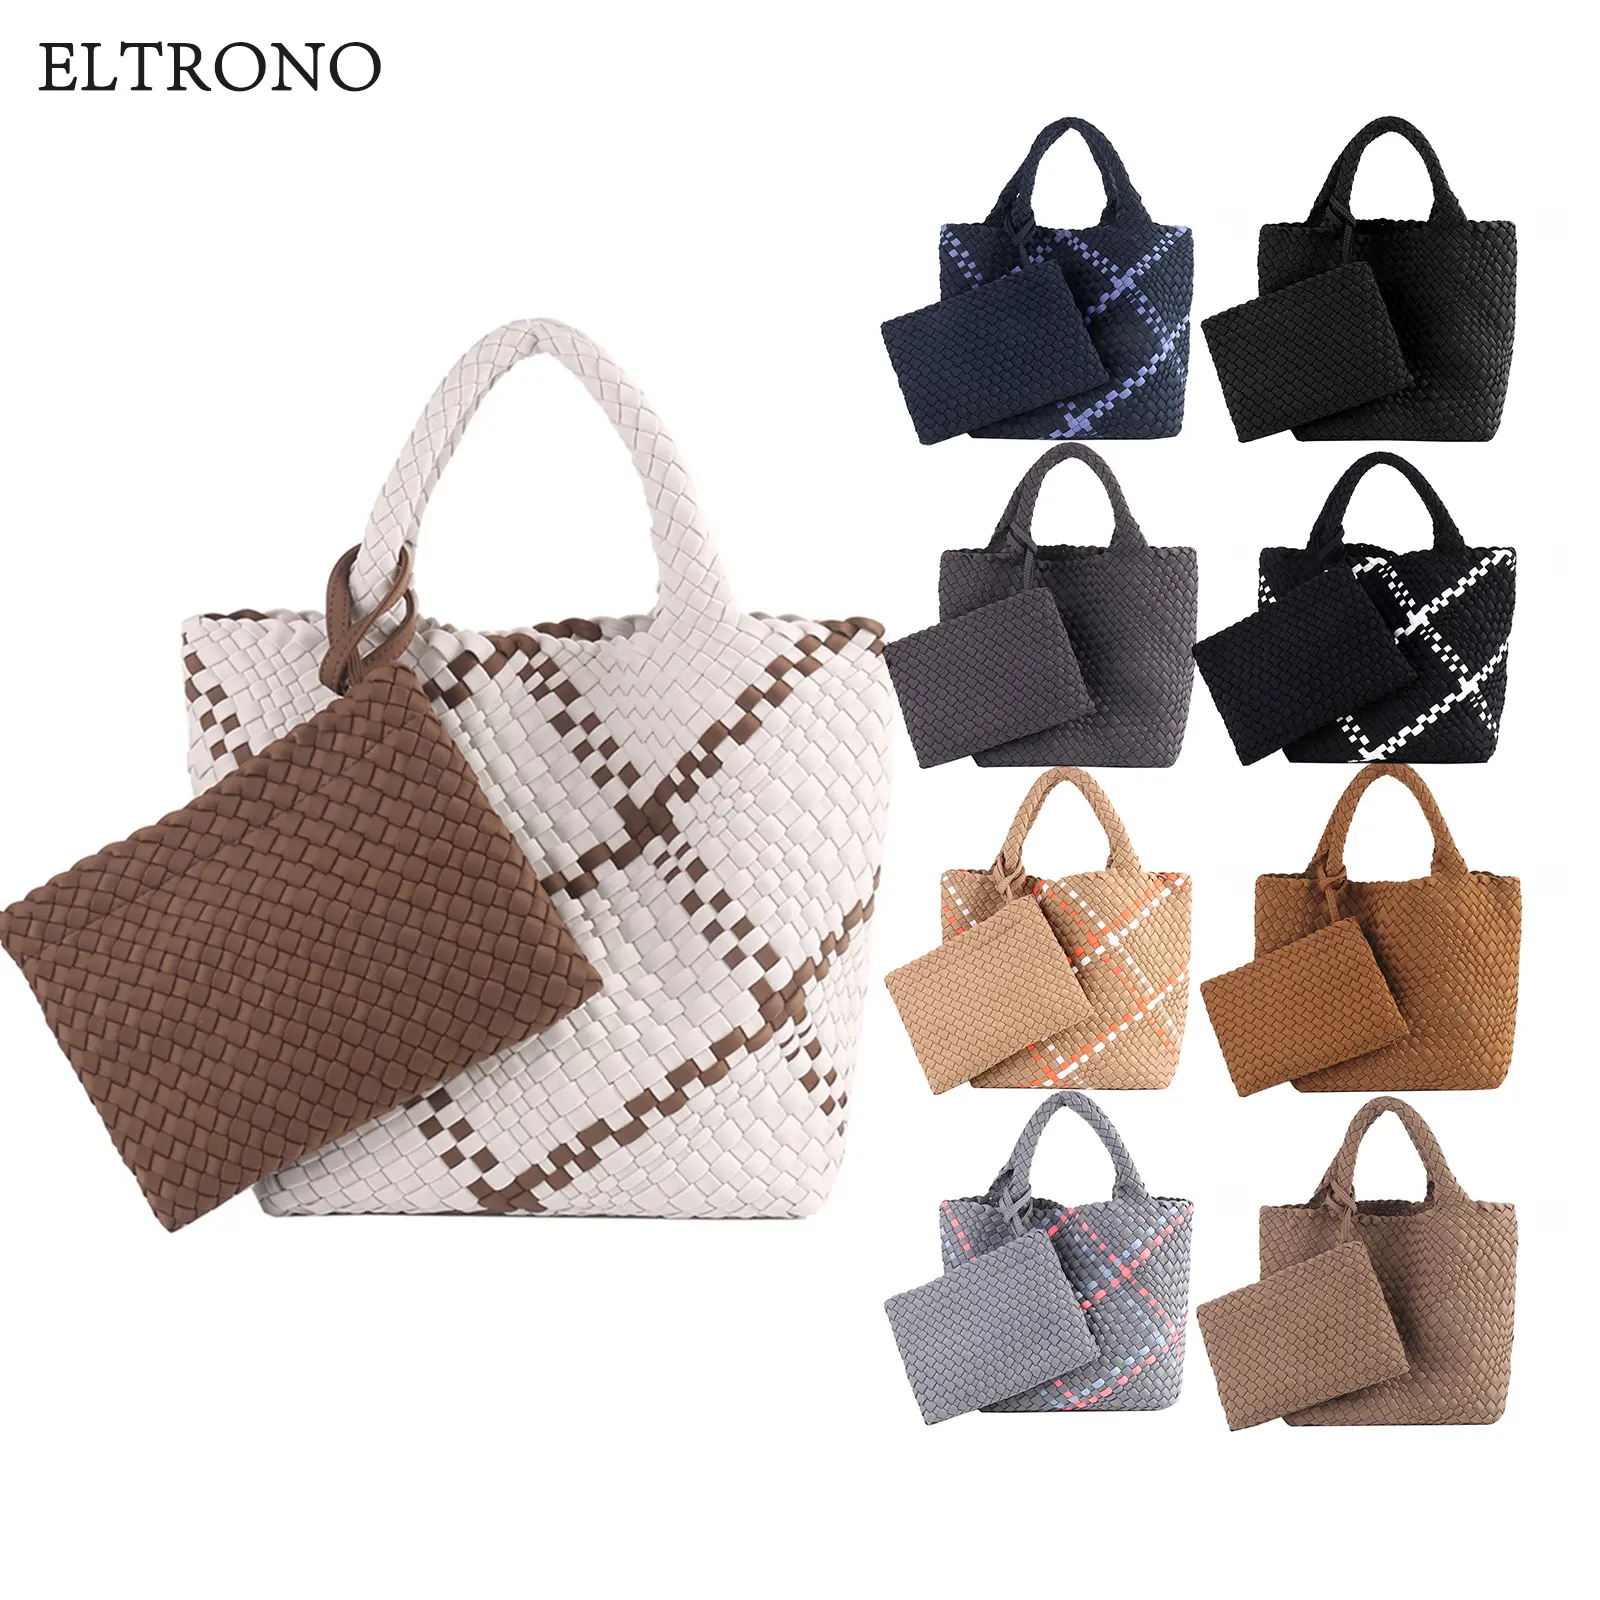 New Products Woven Tote Bag Neoprene Woven Bag Weaved Tote Handbag Sets